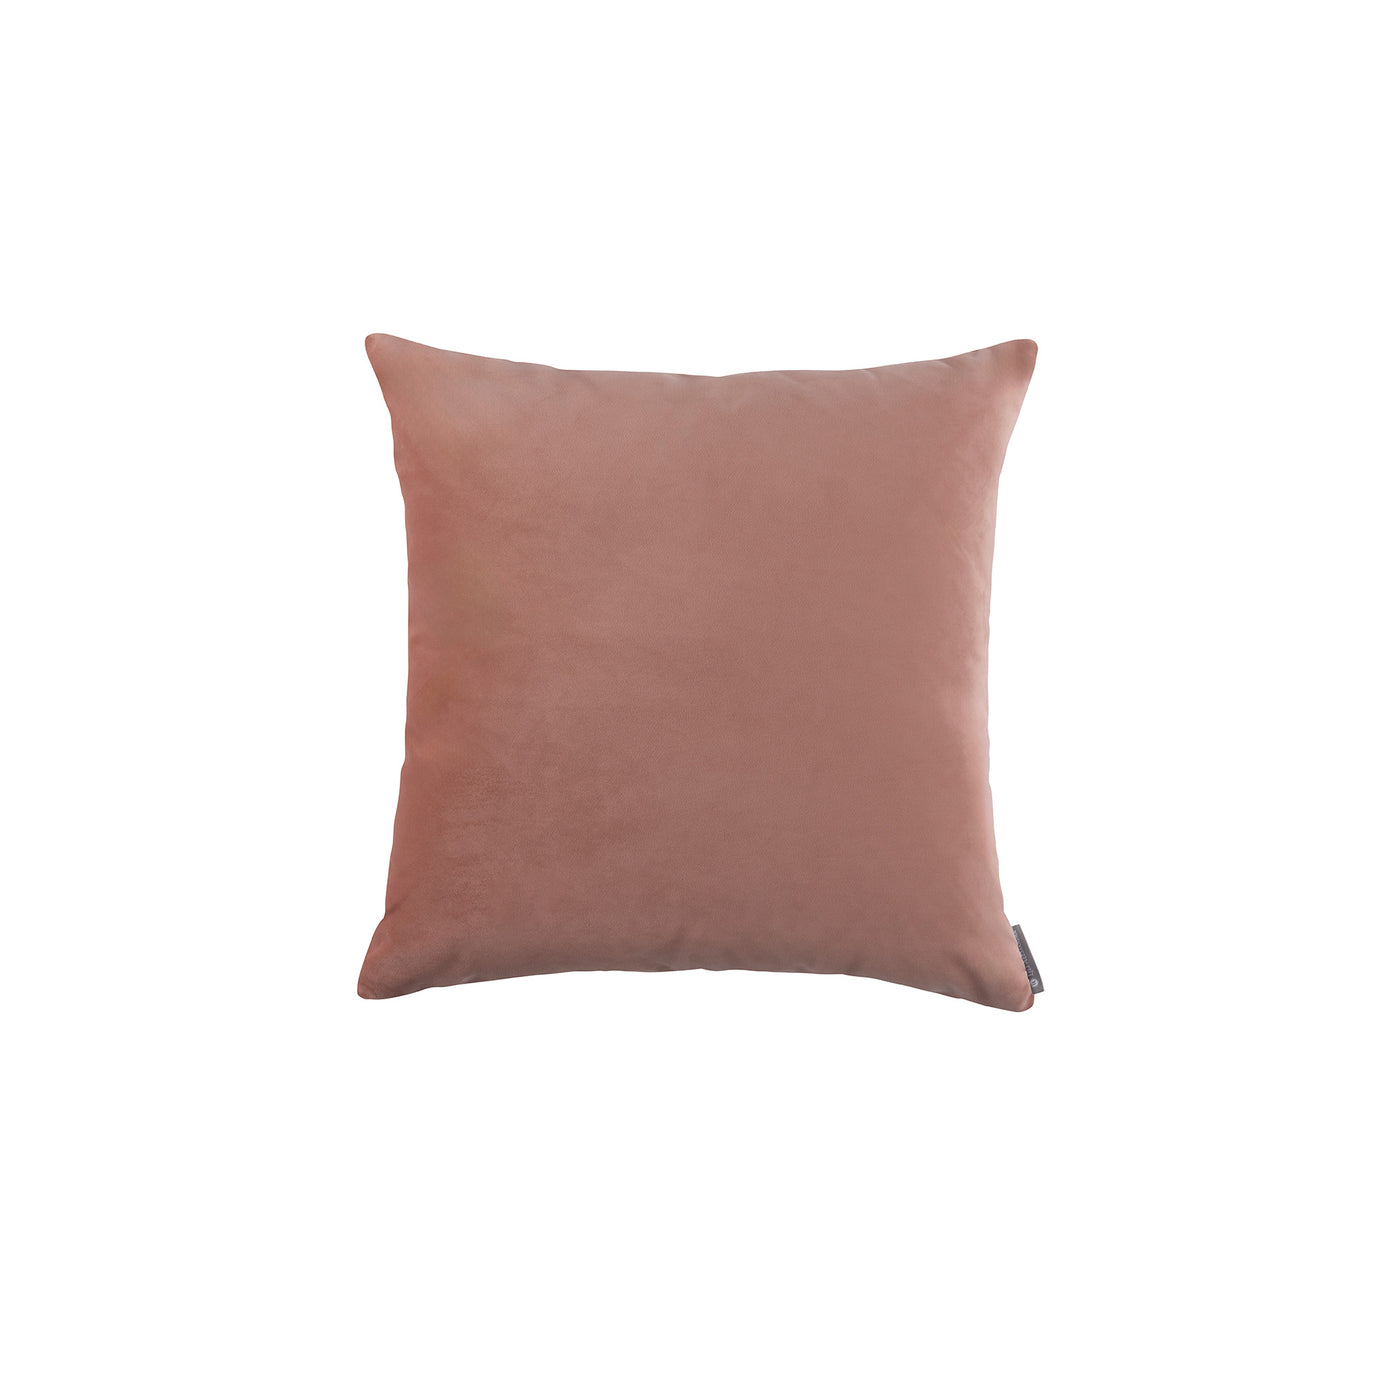 Vivid Shell Small Square Pillow (22x22)